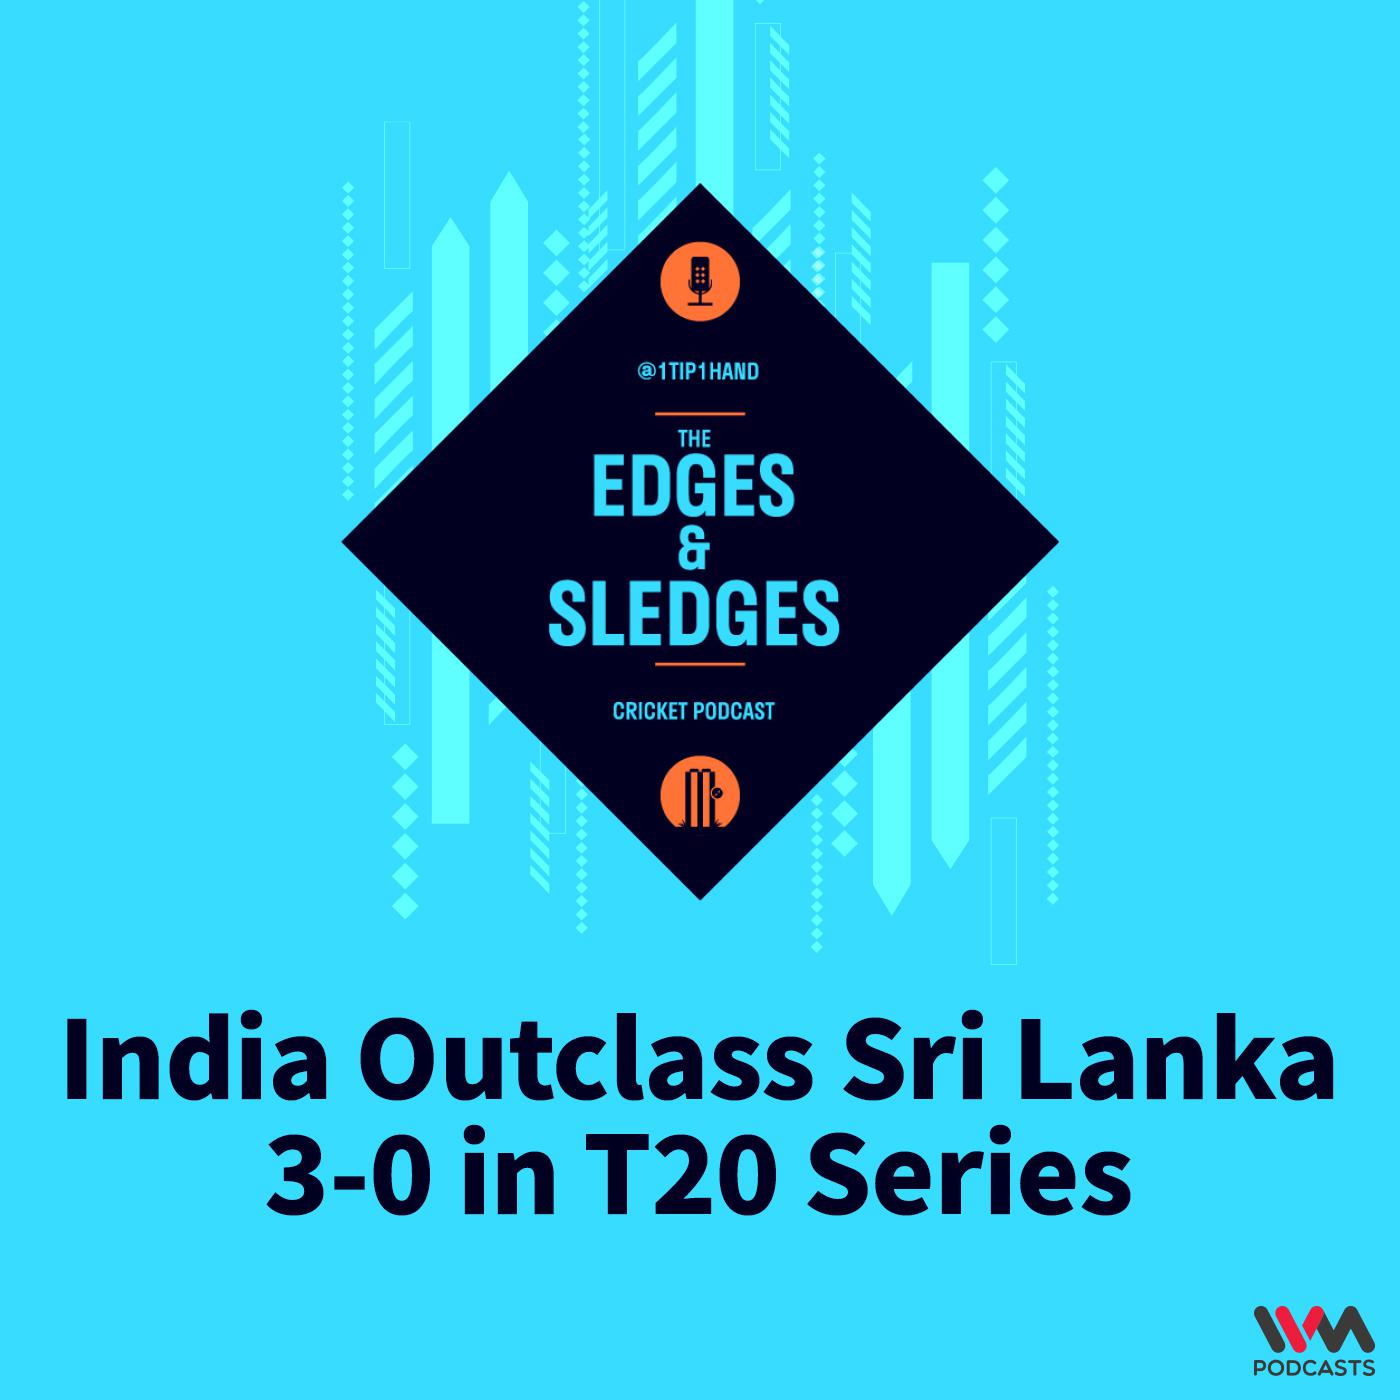 India Outclass Sri Lanka 3-0 in T20 Series